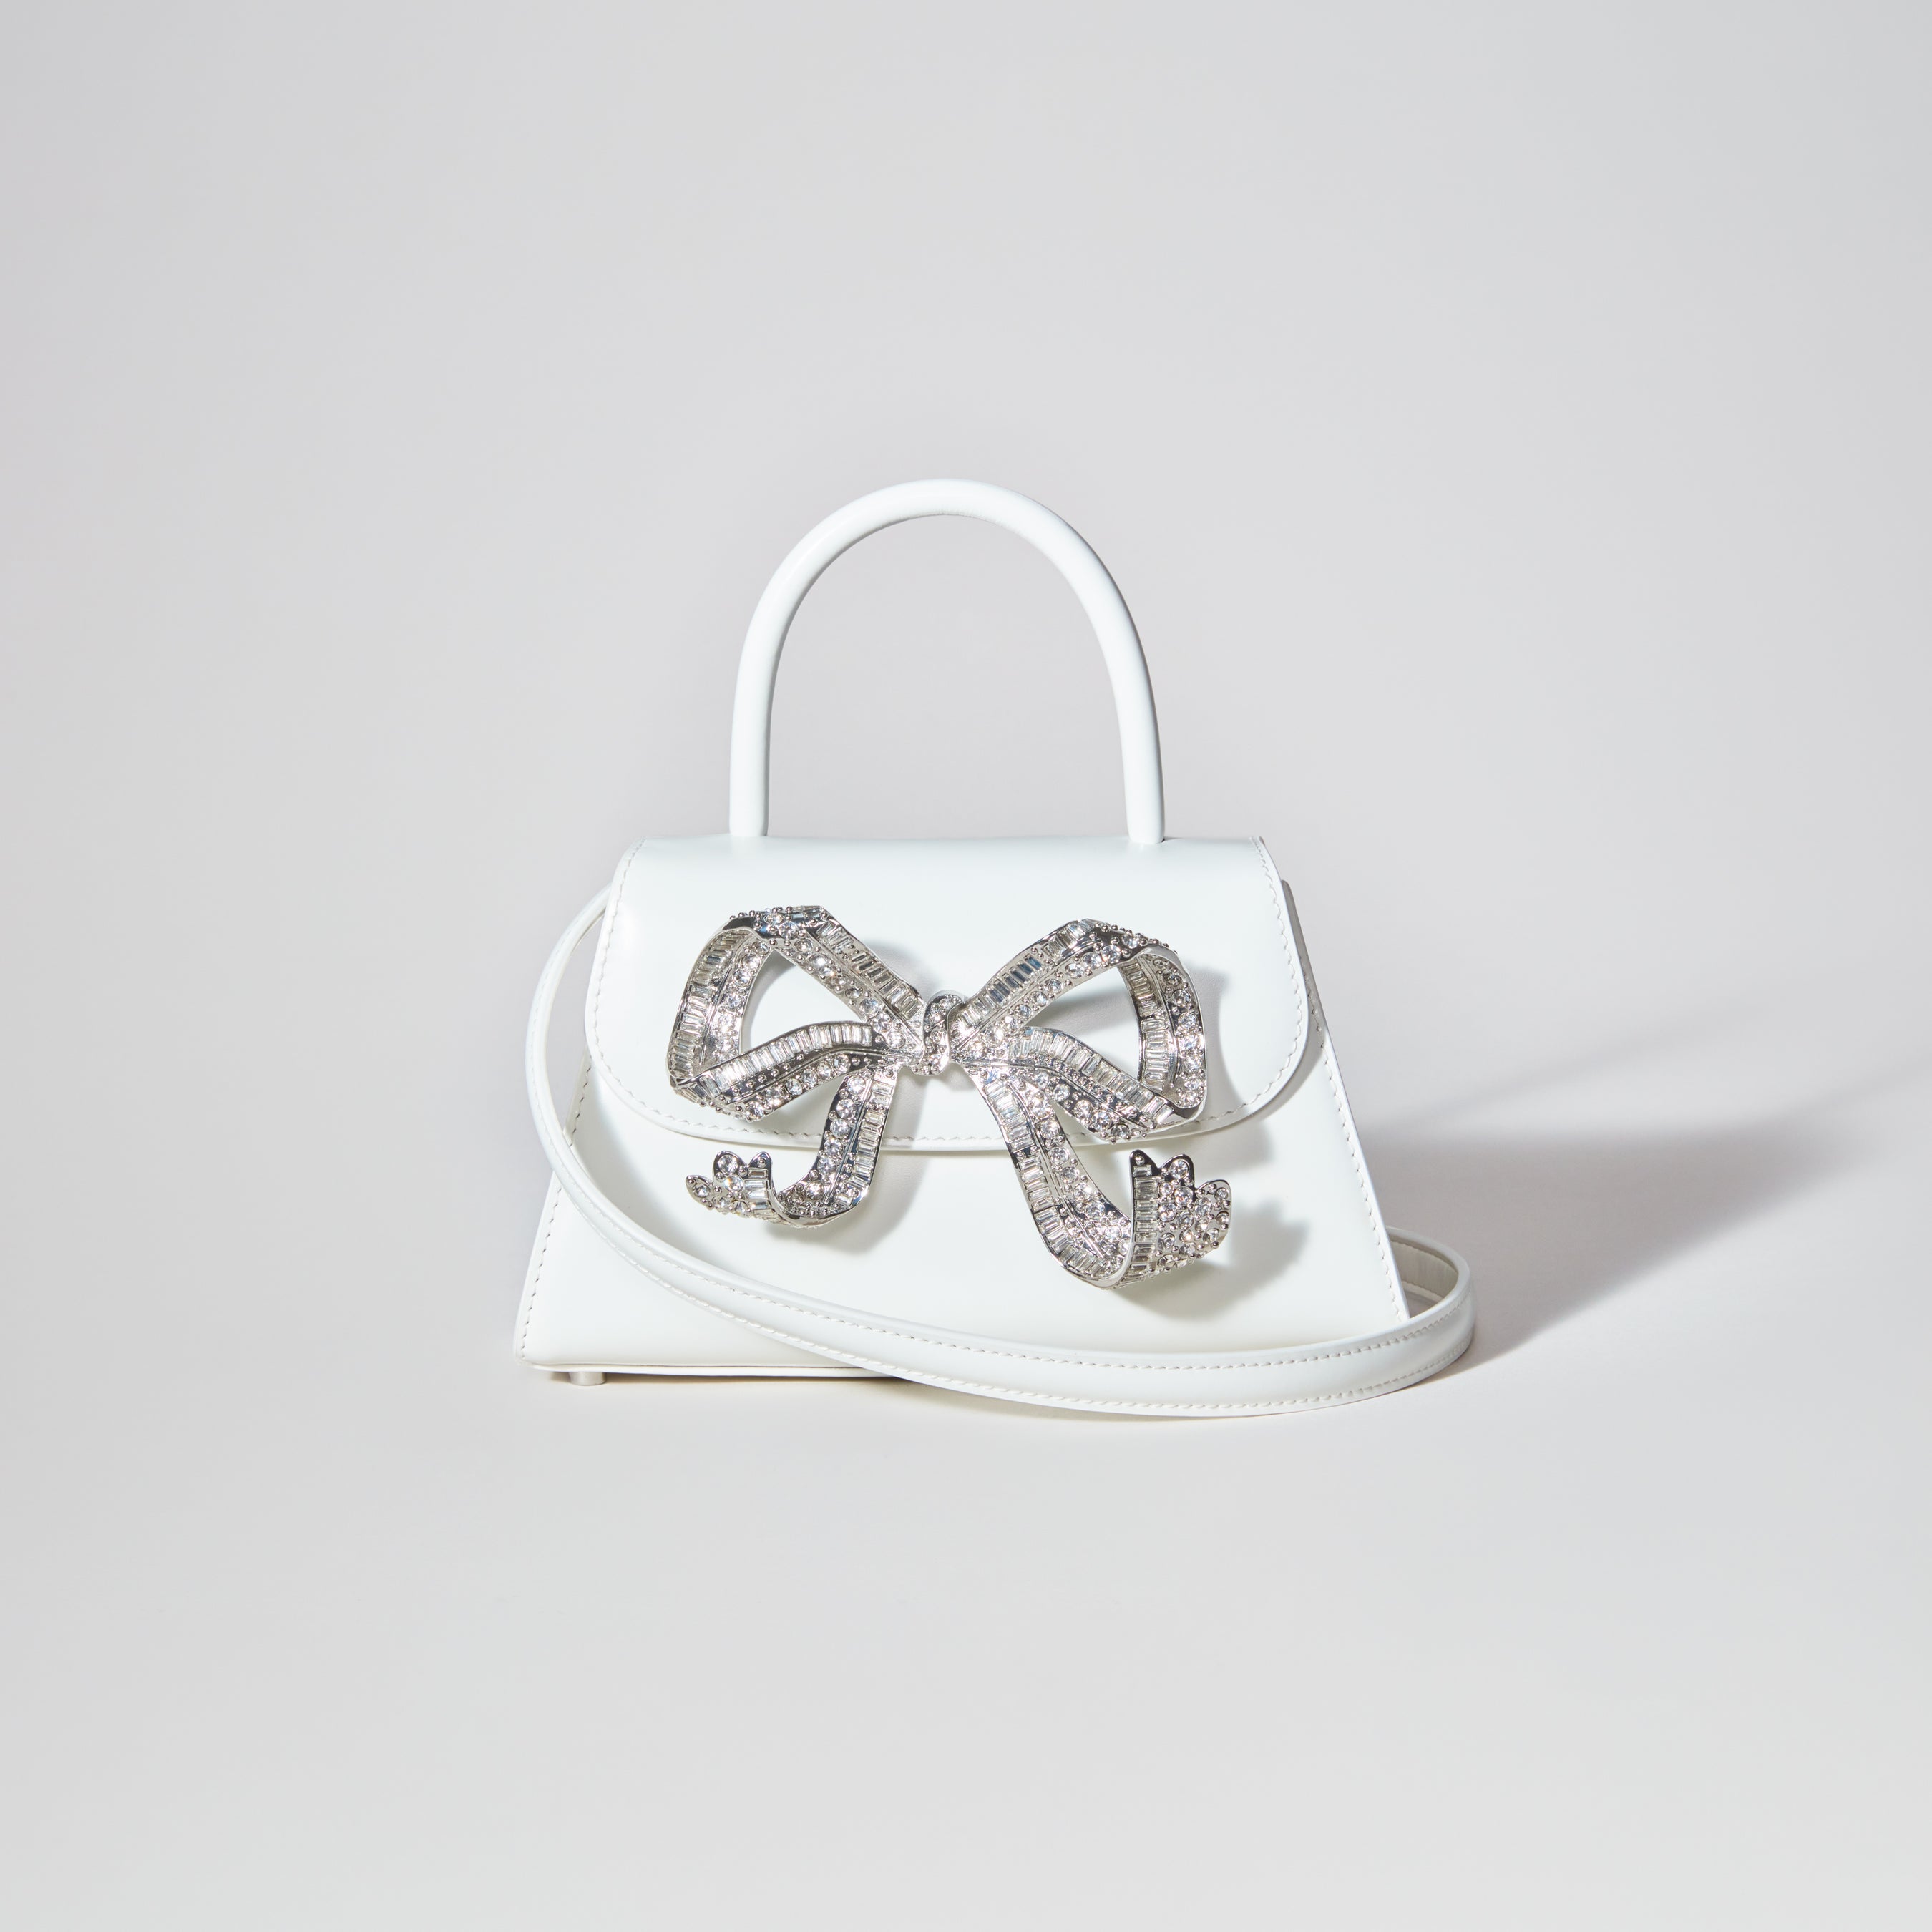 The Bow Mini in White with Diamanté